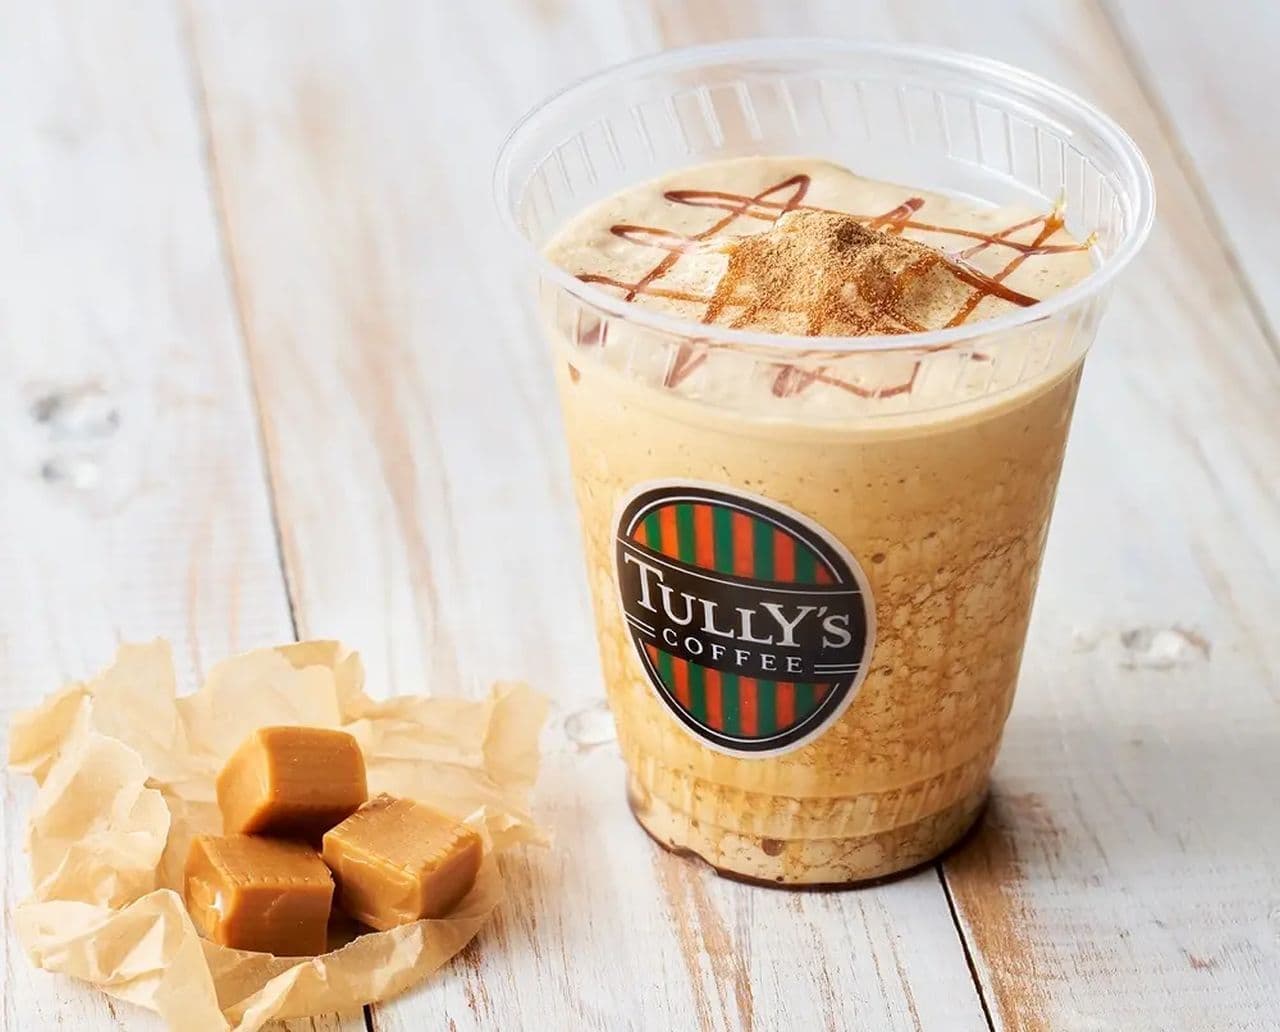 Tully's Coffee "Caramel Cafe Granita